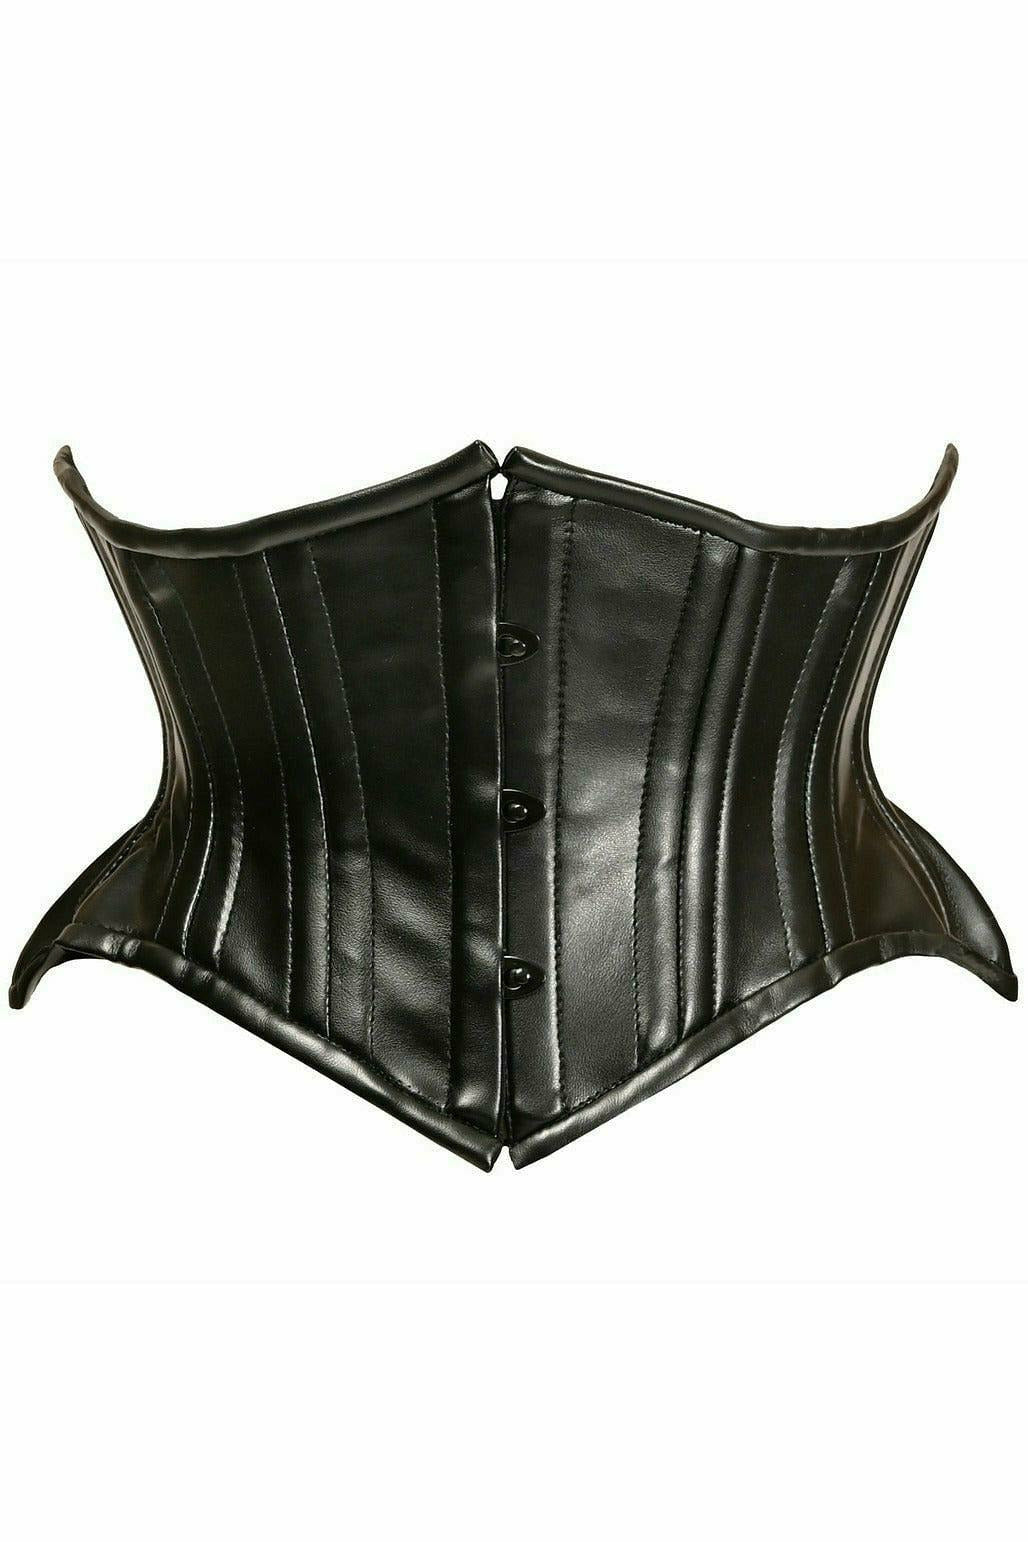 Daisy Corsets Top Drawer Black Faux Leather Double Steel Boned Curvy Cut Waist Cincher